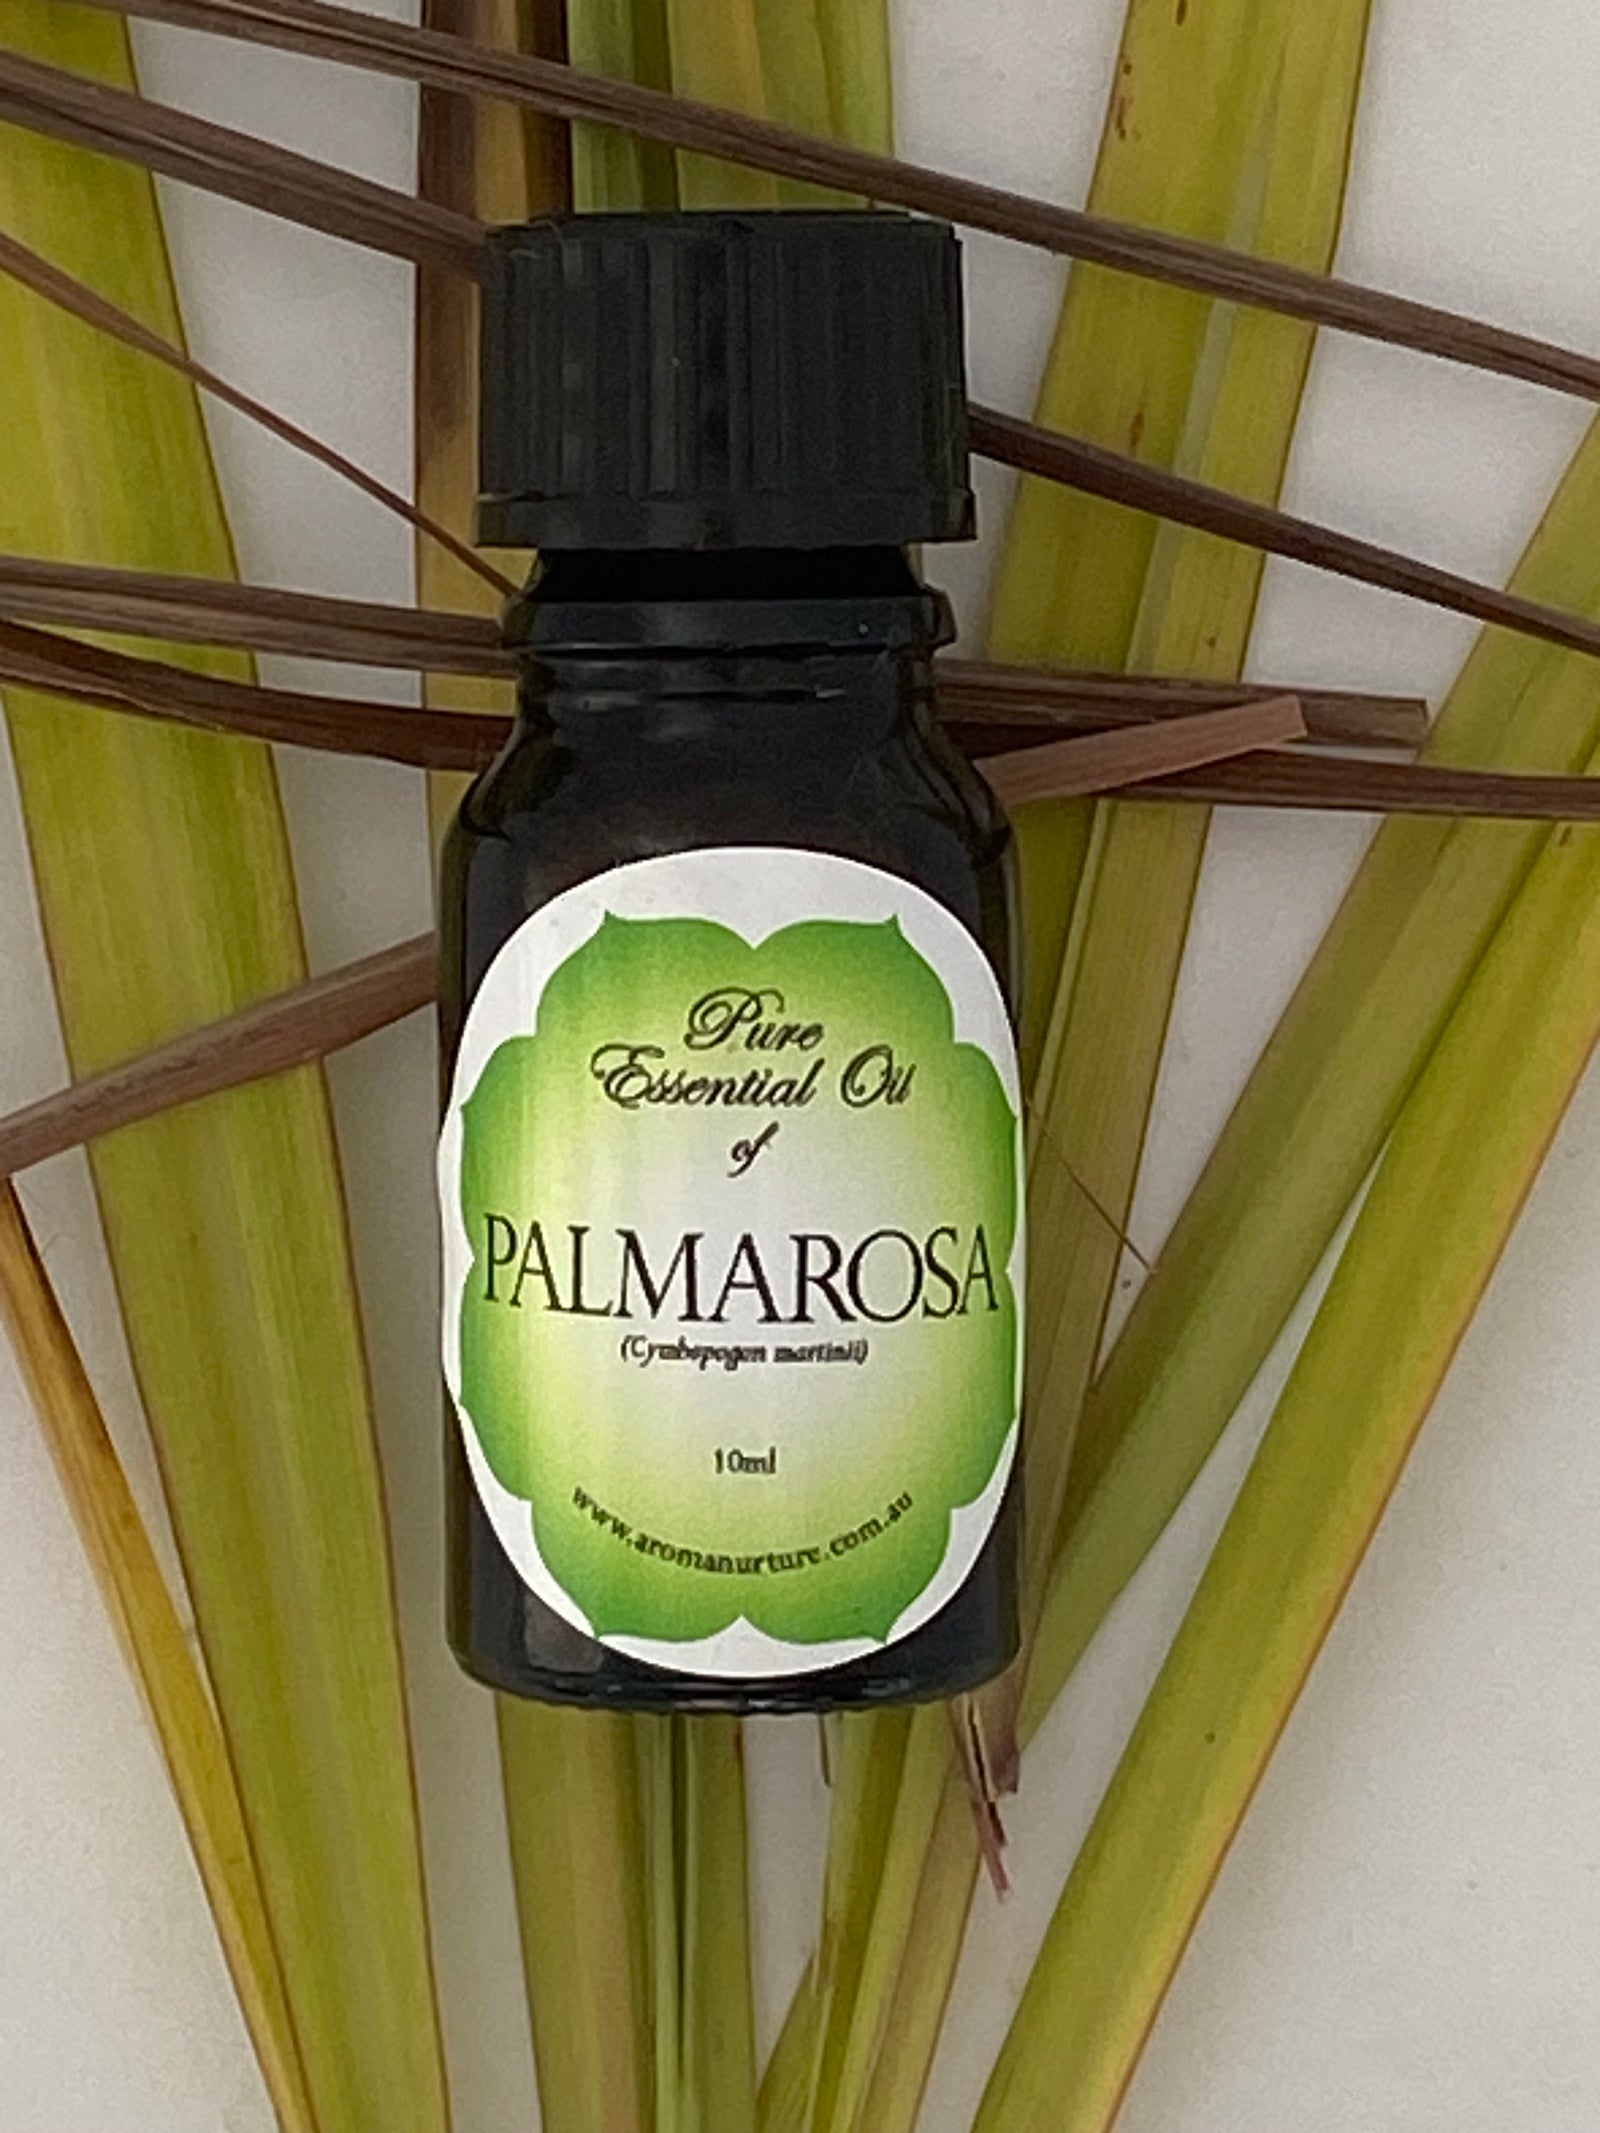 Pure Essential oil of Palmarosa 10mls. (Cymbopogon martinii).